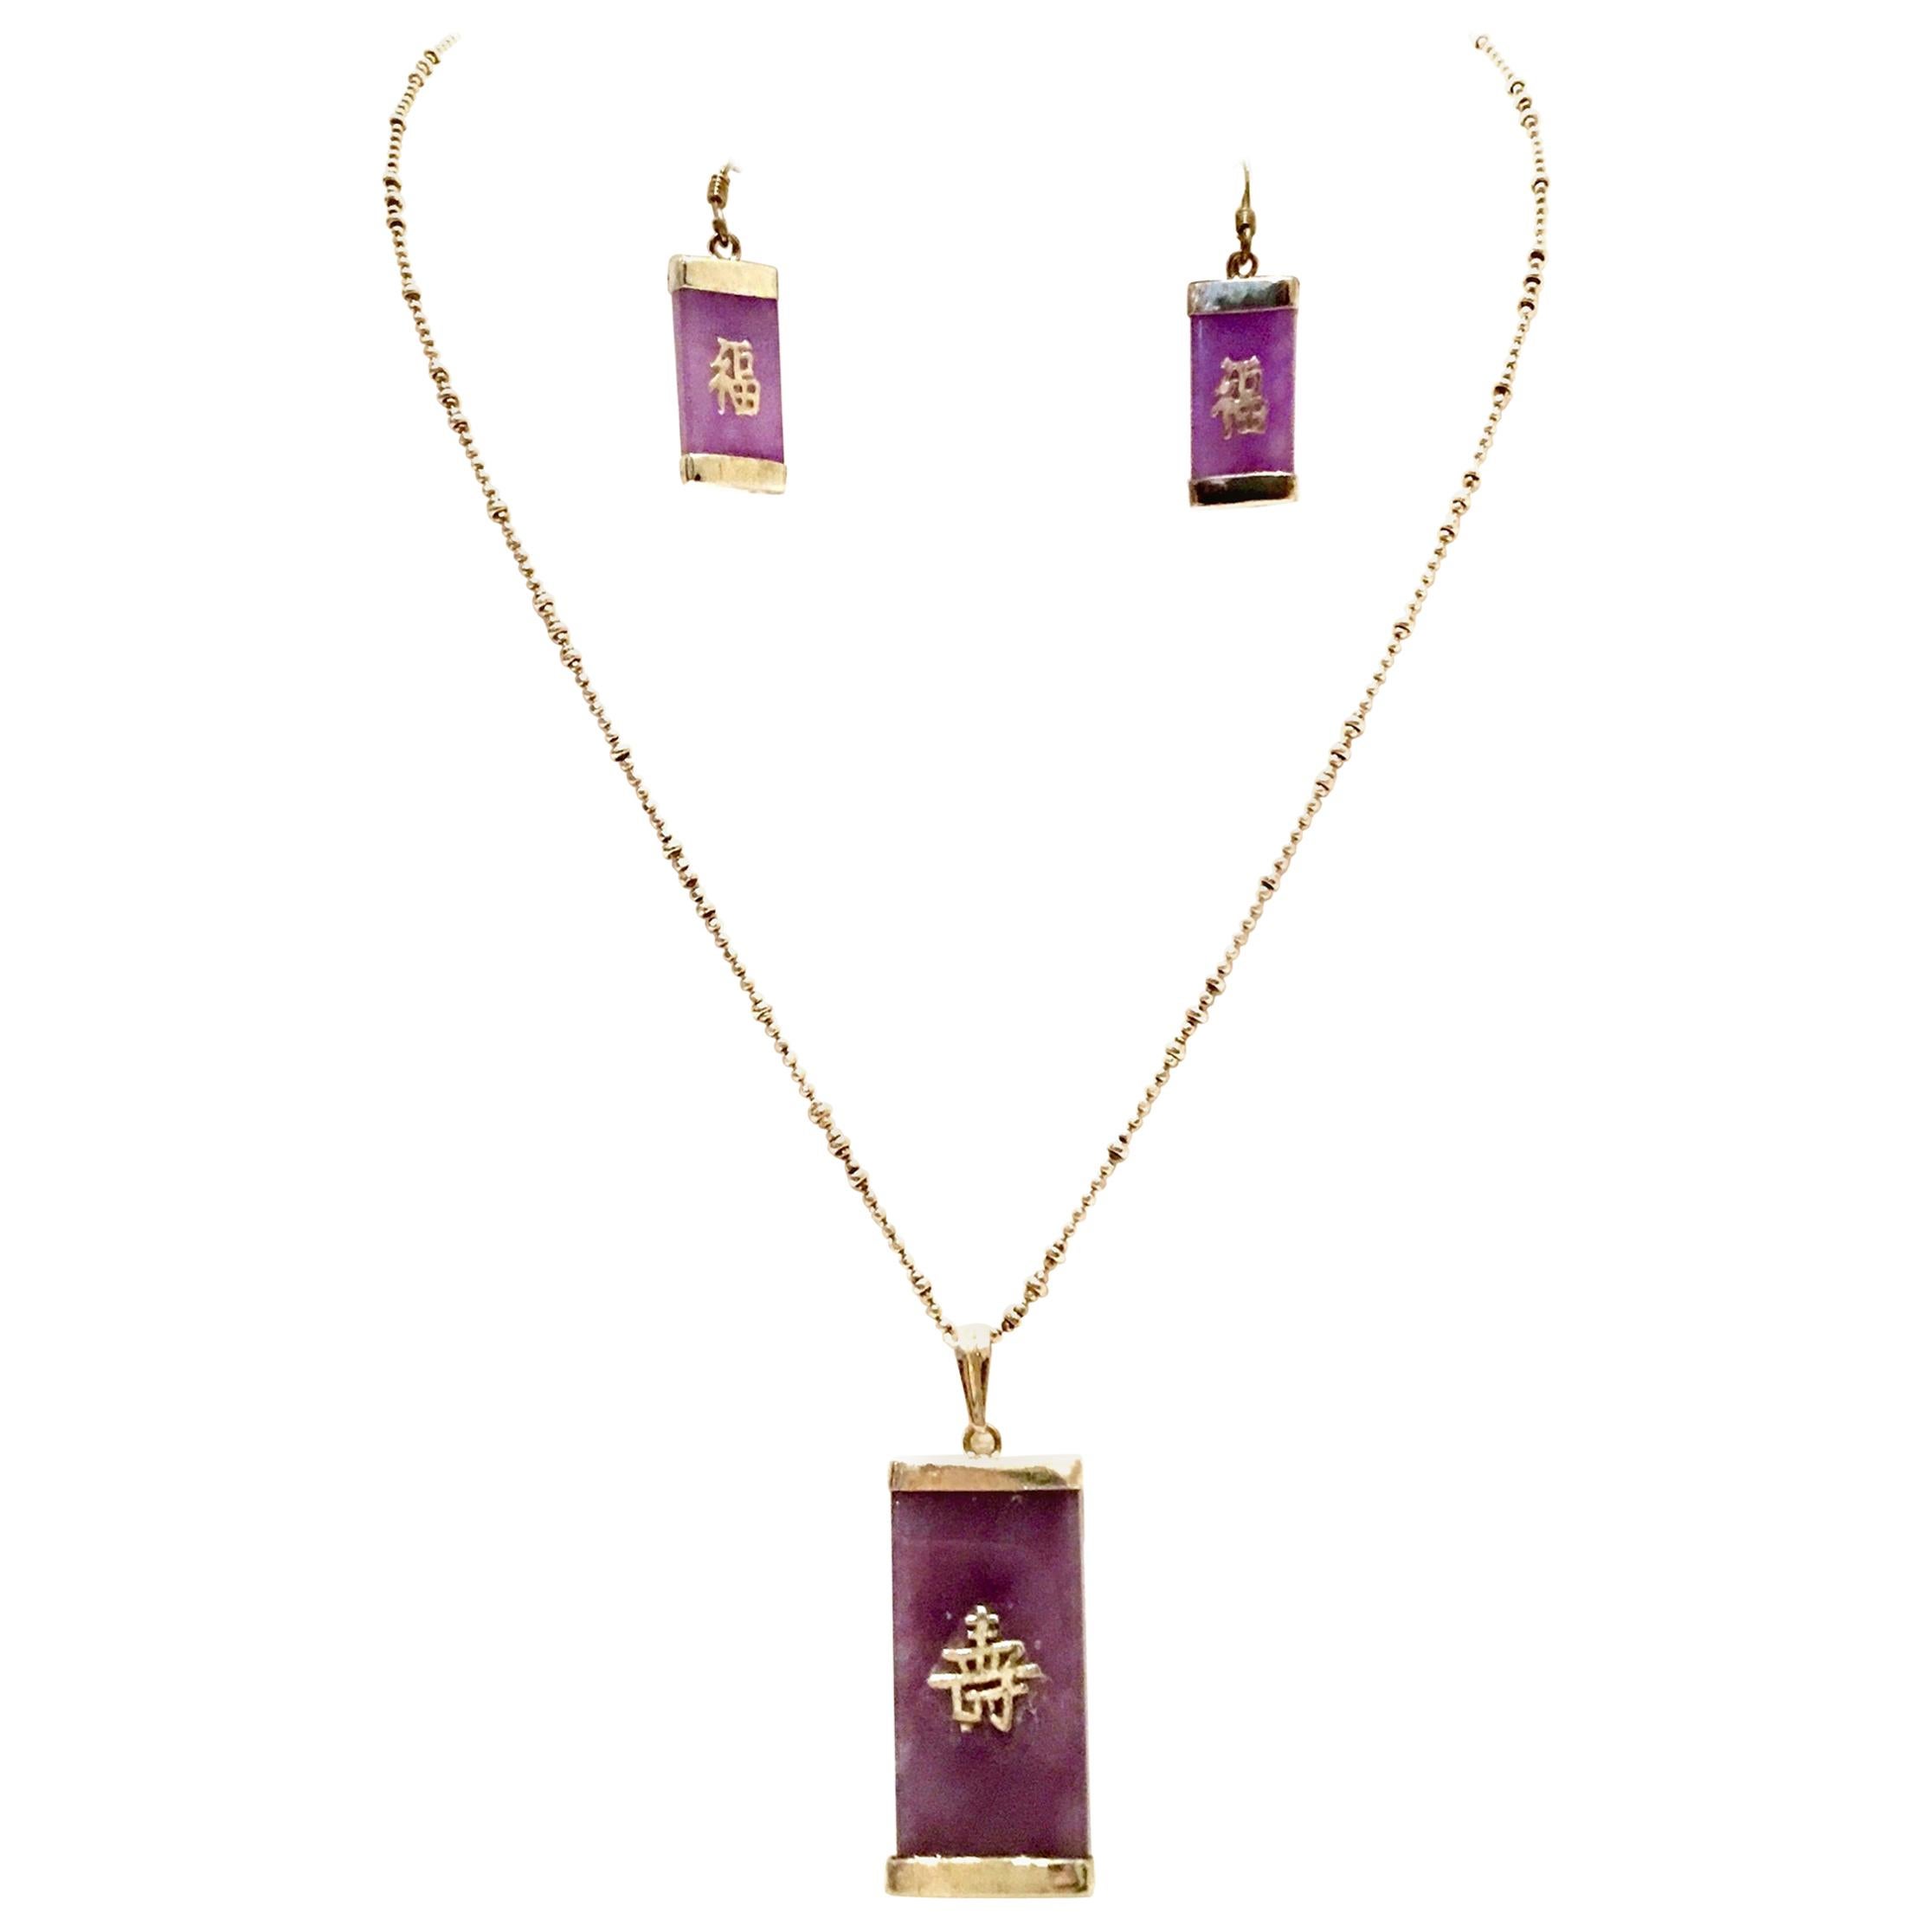 20th Century Italian 925 Sterling Lavender Jade Pendant Necklace & Earrings S/3